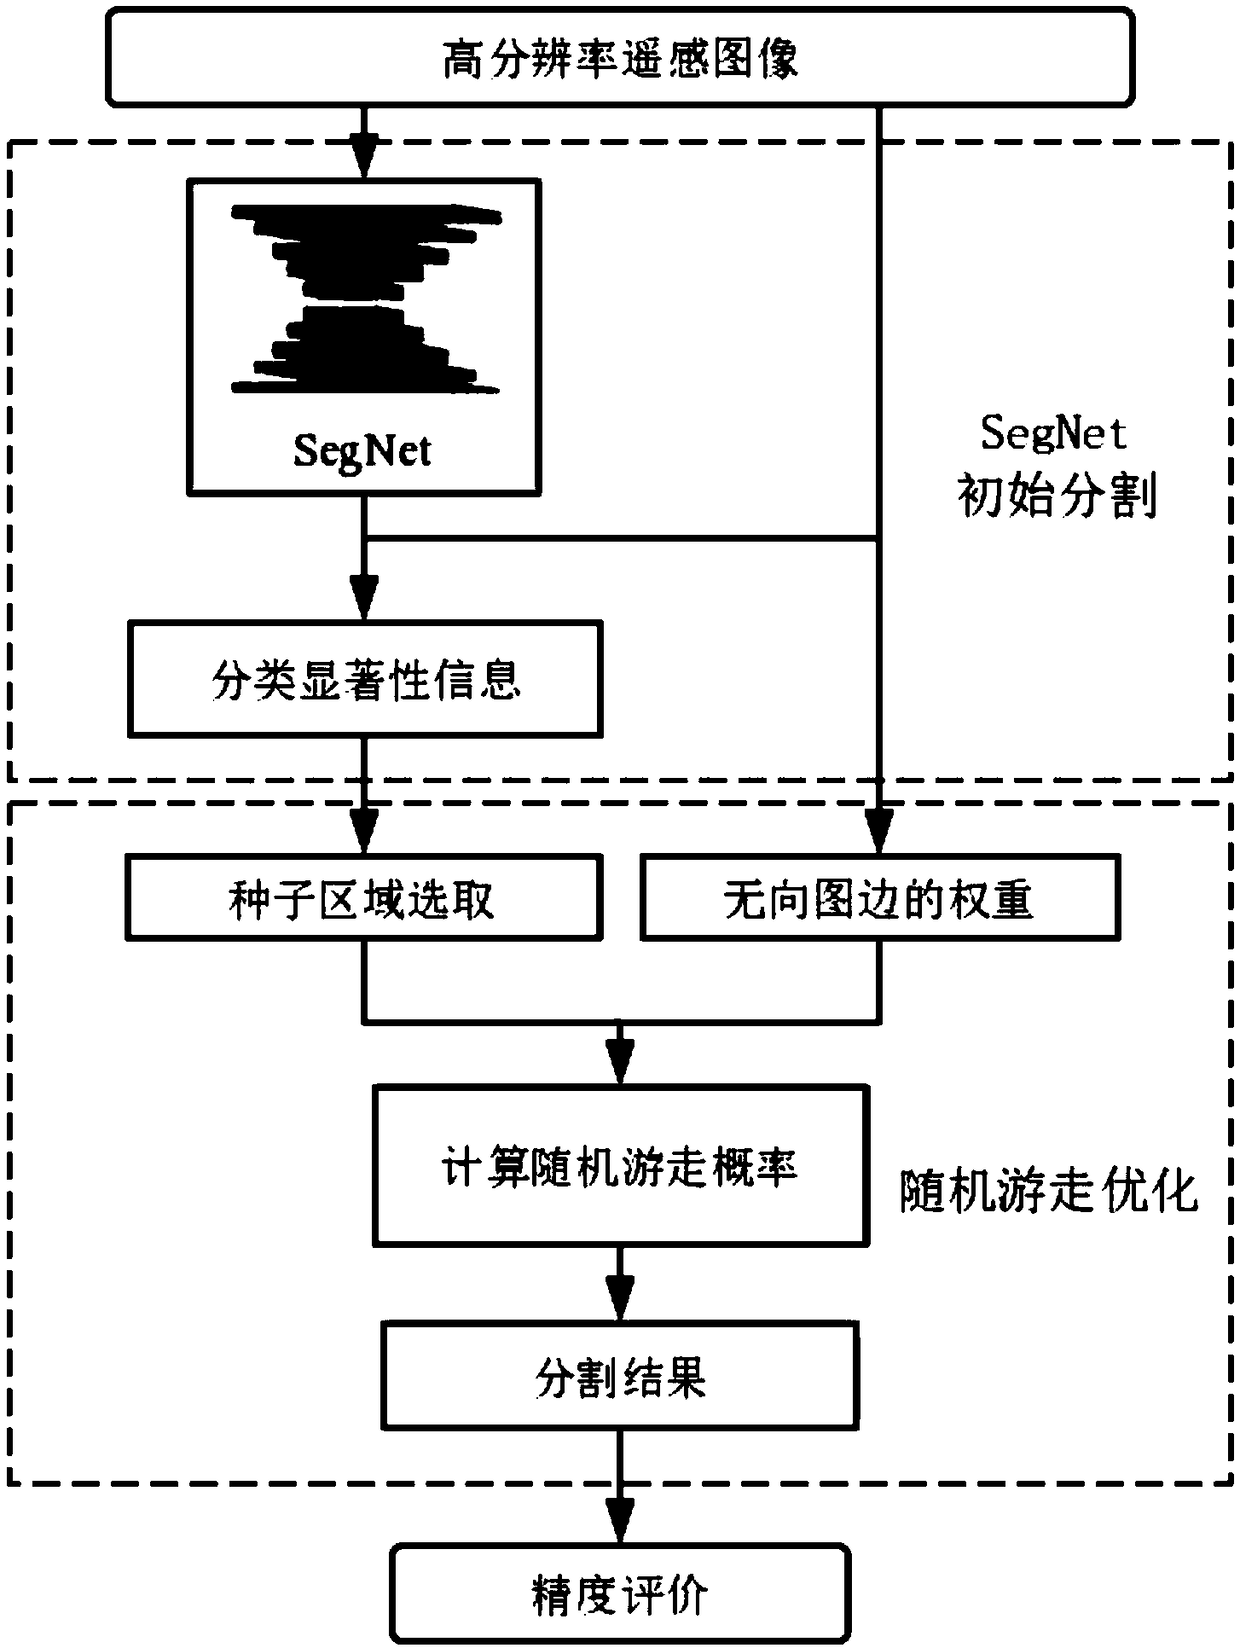 A SegNet remote sensing image semantic segmentation method combined with random walk